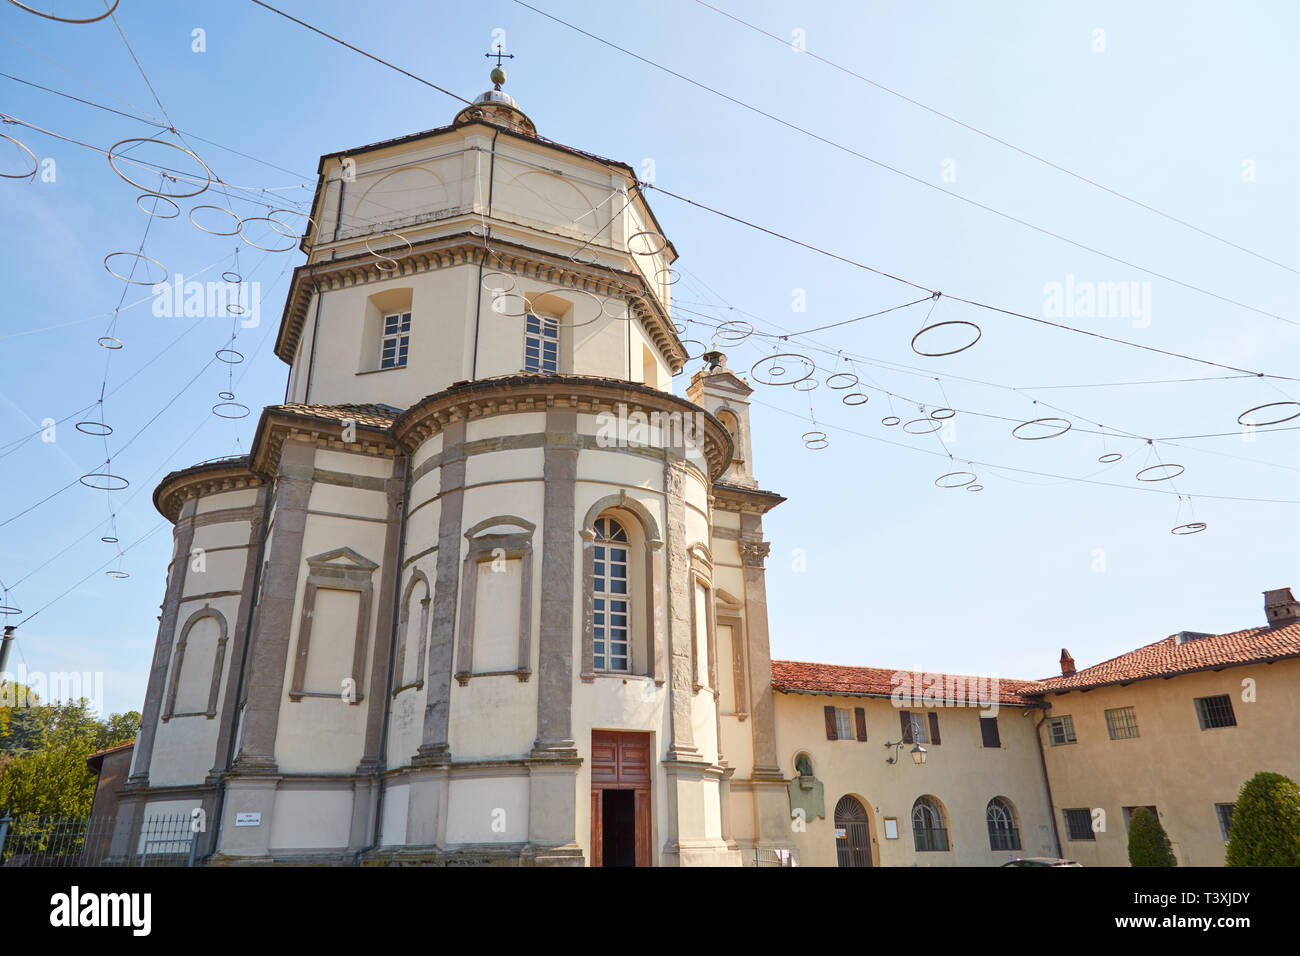 TURIN, Italien - 20 AUGUST 2017: Cappuccini Berg Kirche an einem sonnigen Sommertag in Turin, Italien Stockfoto